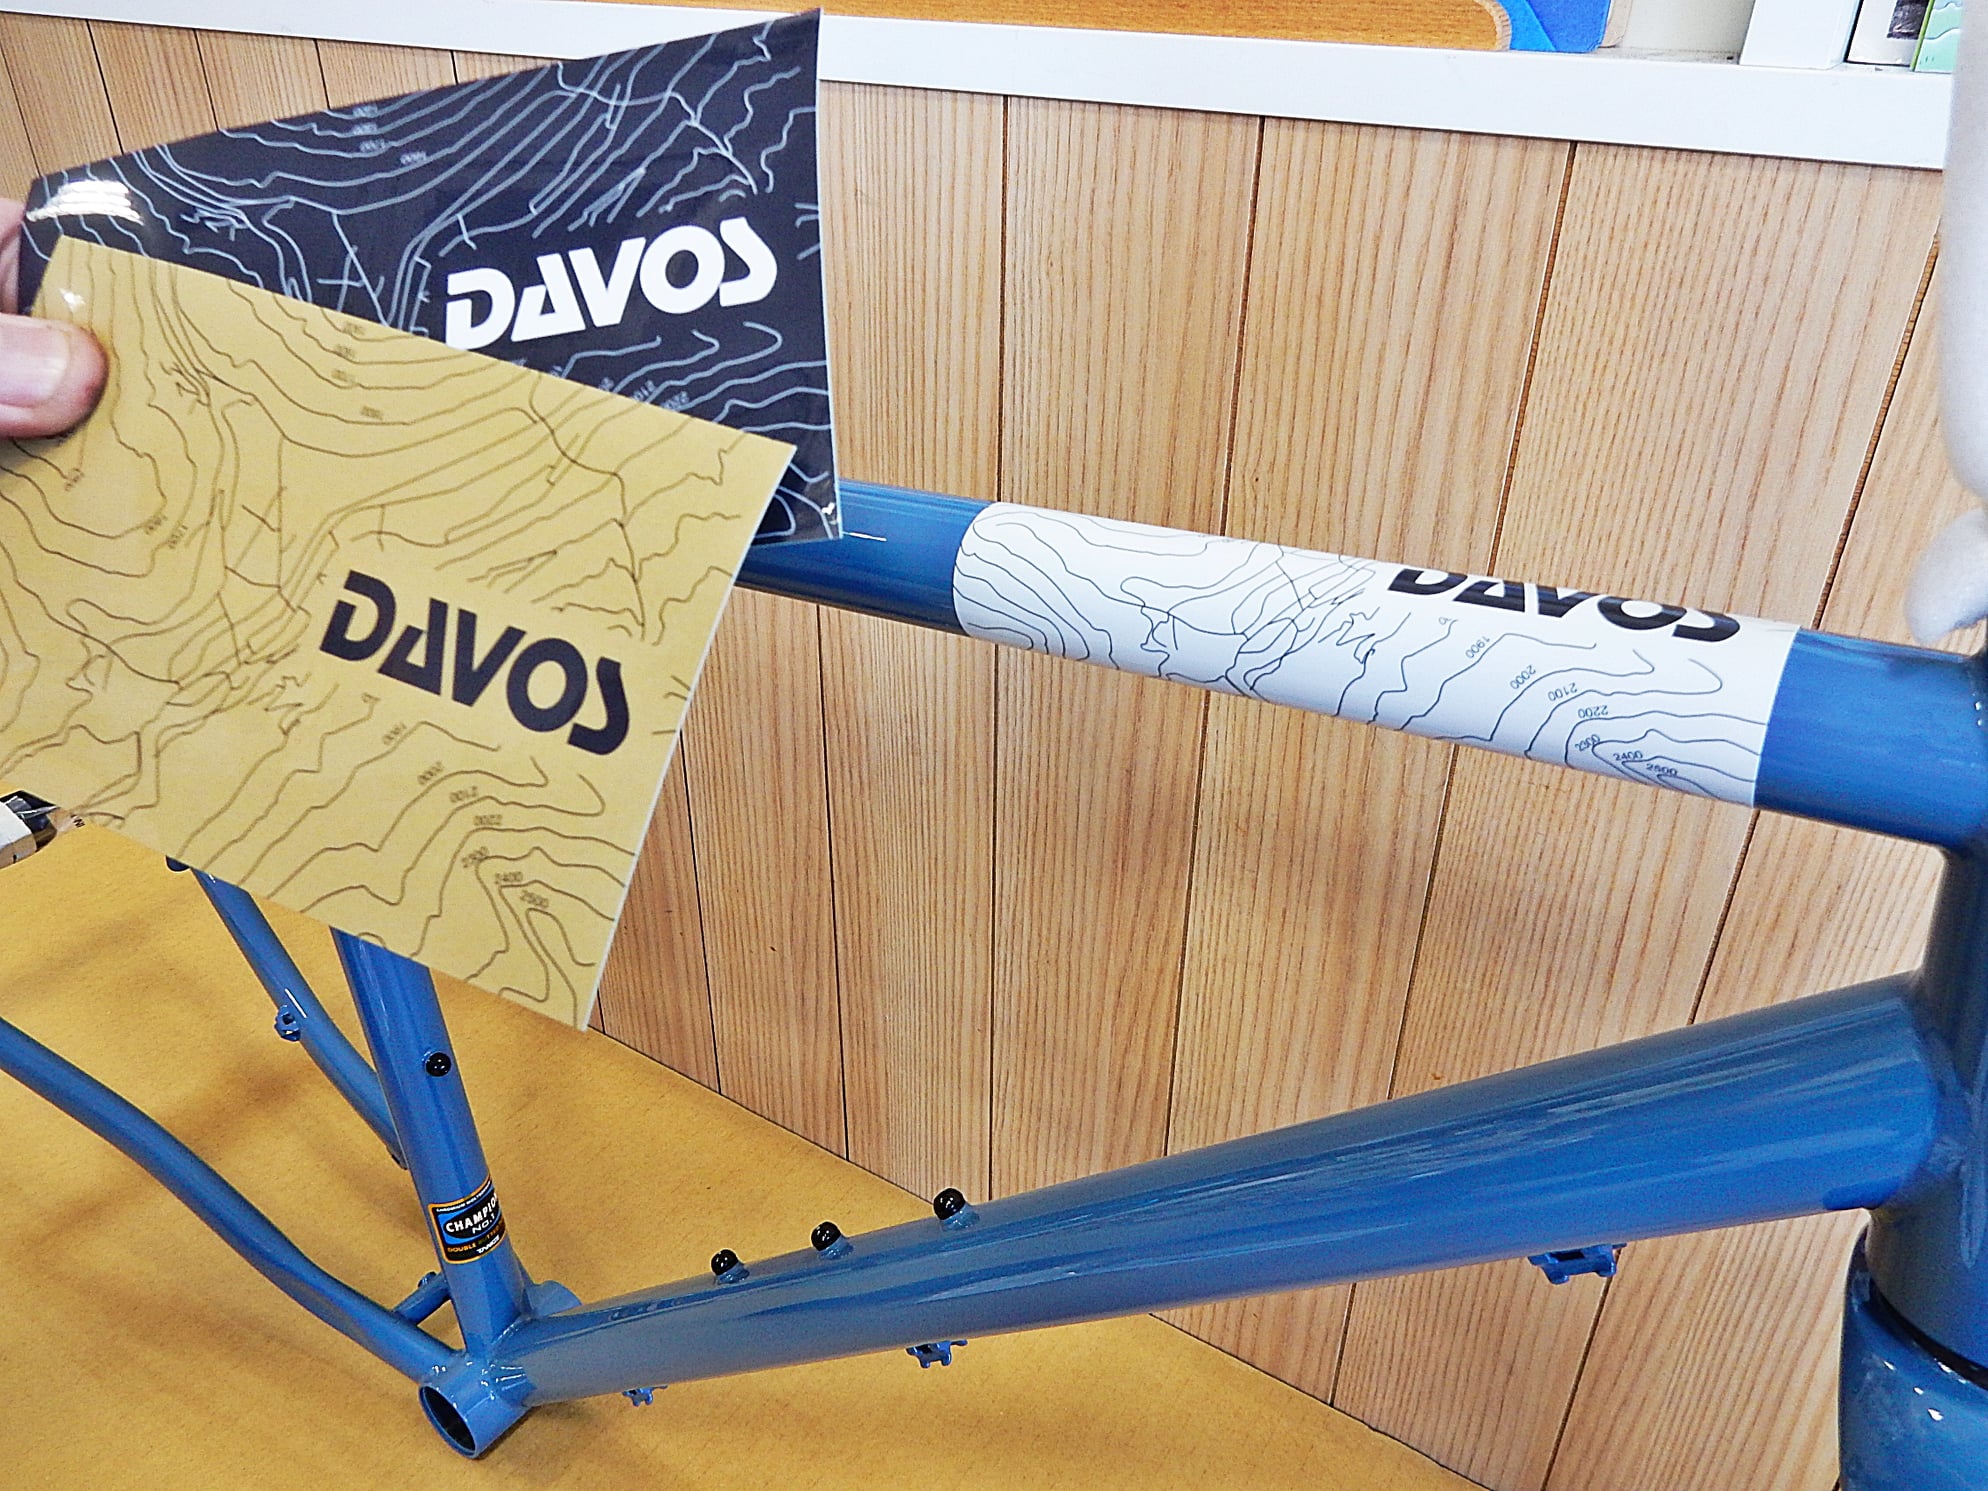 DAVOS davos　d-604 D-604 ダボス　ツーリングバイク　ネオランドナー　グラベルロード　クロモリフレーム　新色　モーニングヘイズブルー　サイクリング　広島県福山市　FINE fine ファイン